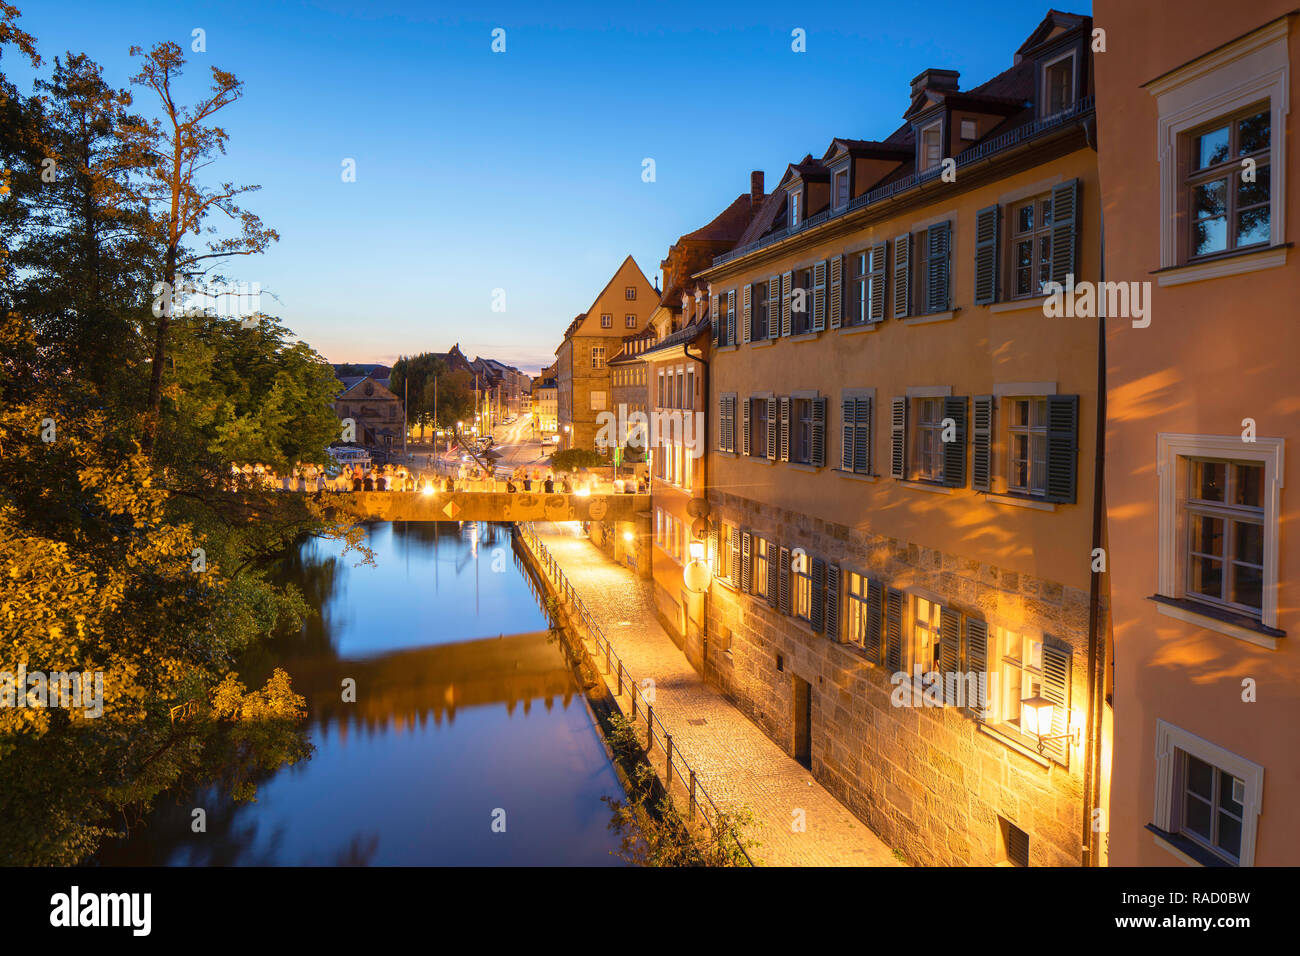 Buildings along River Regnitz at dusk, Bamberg, UNESCO World Heritage Site, Bavaria, Germany, Europe Stock Photo